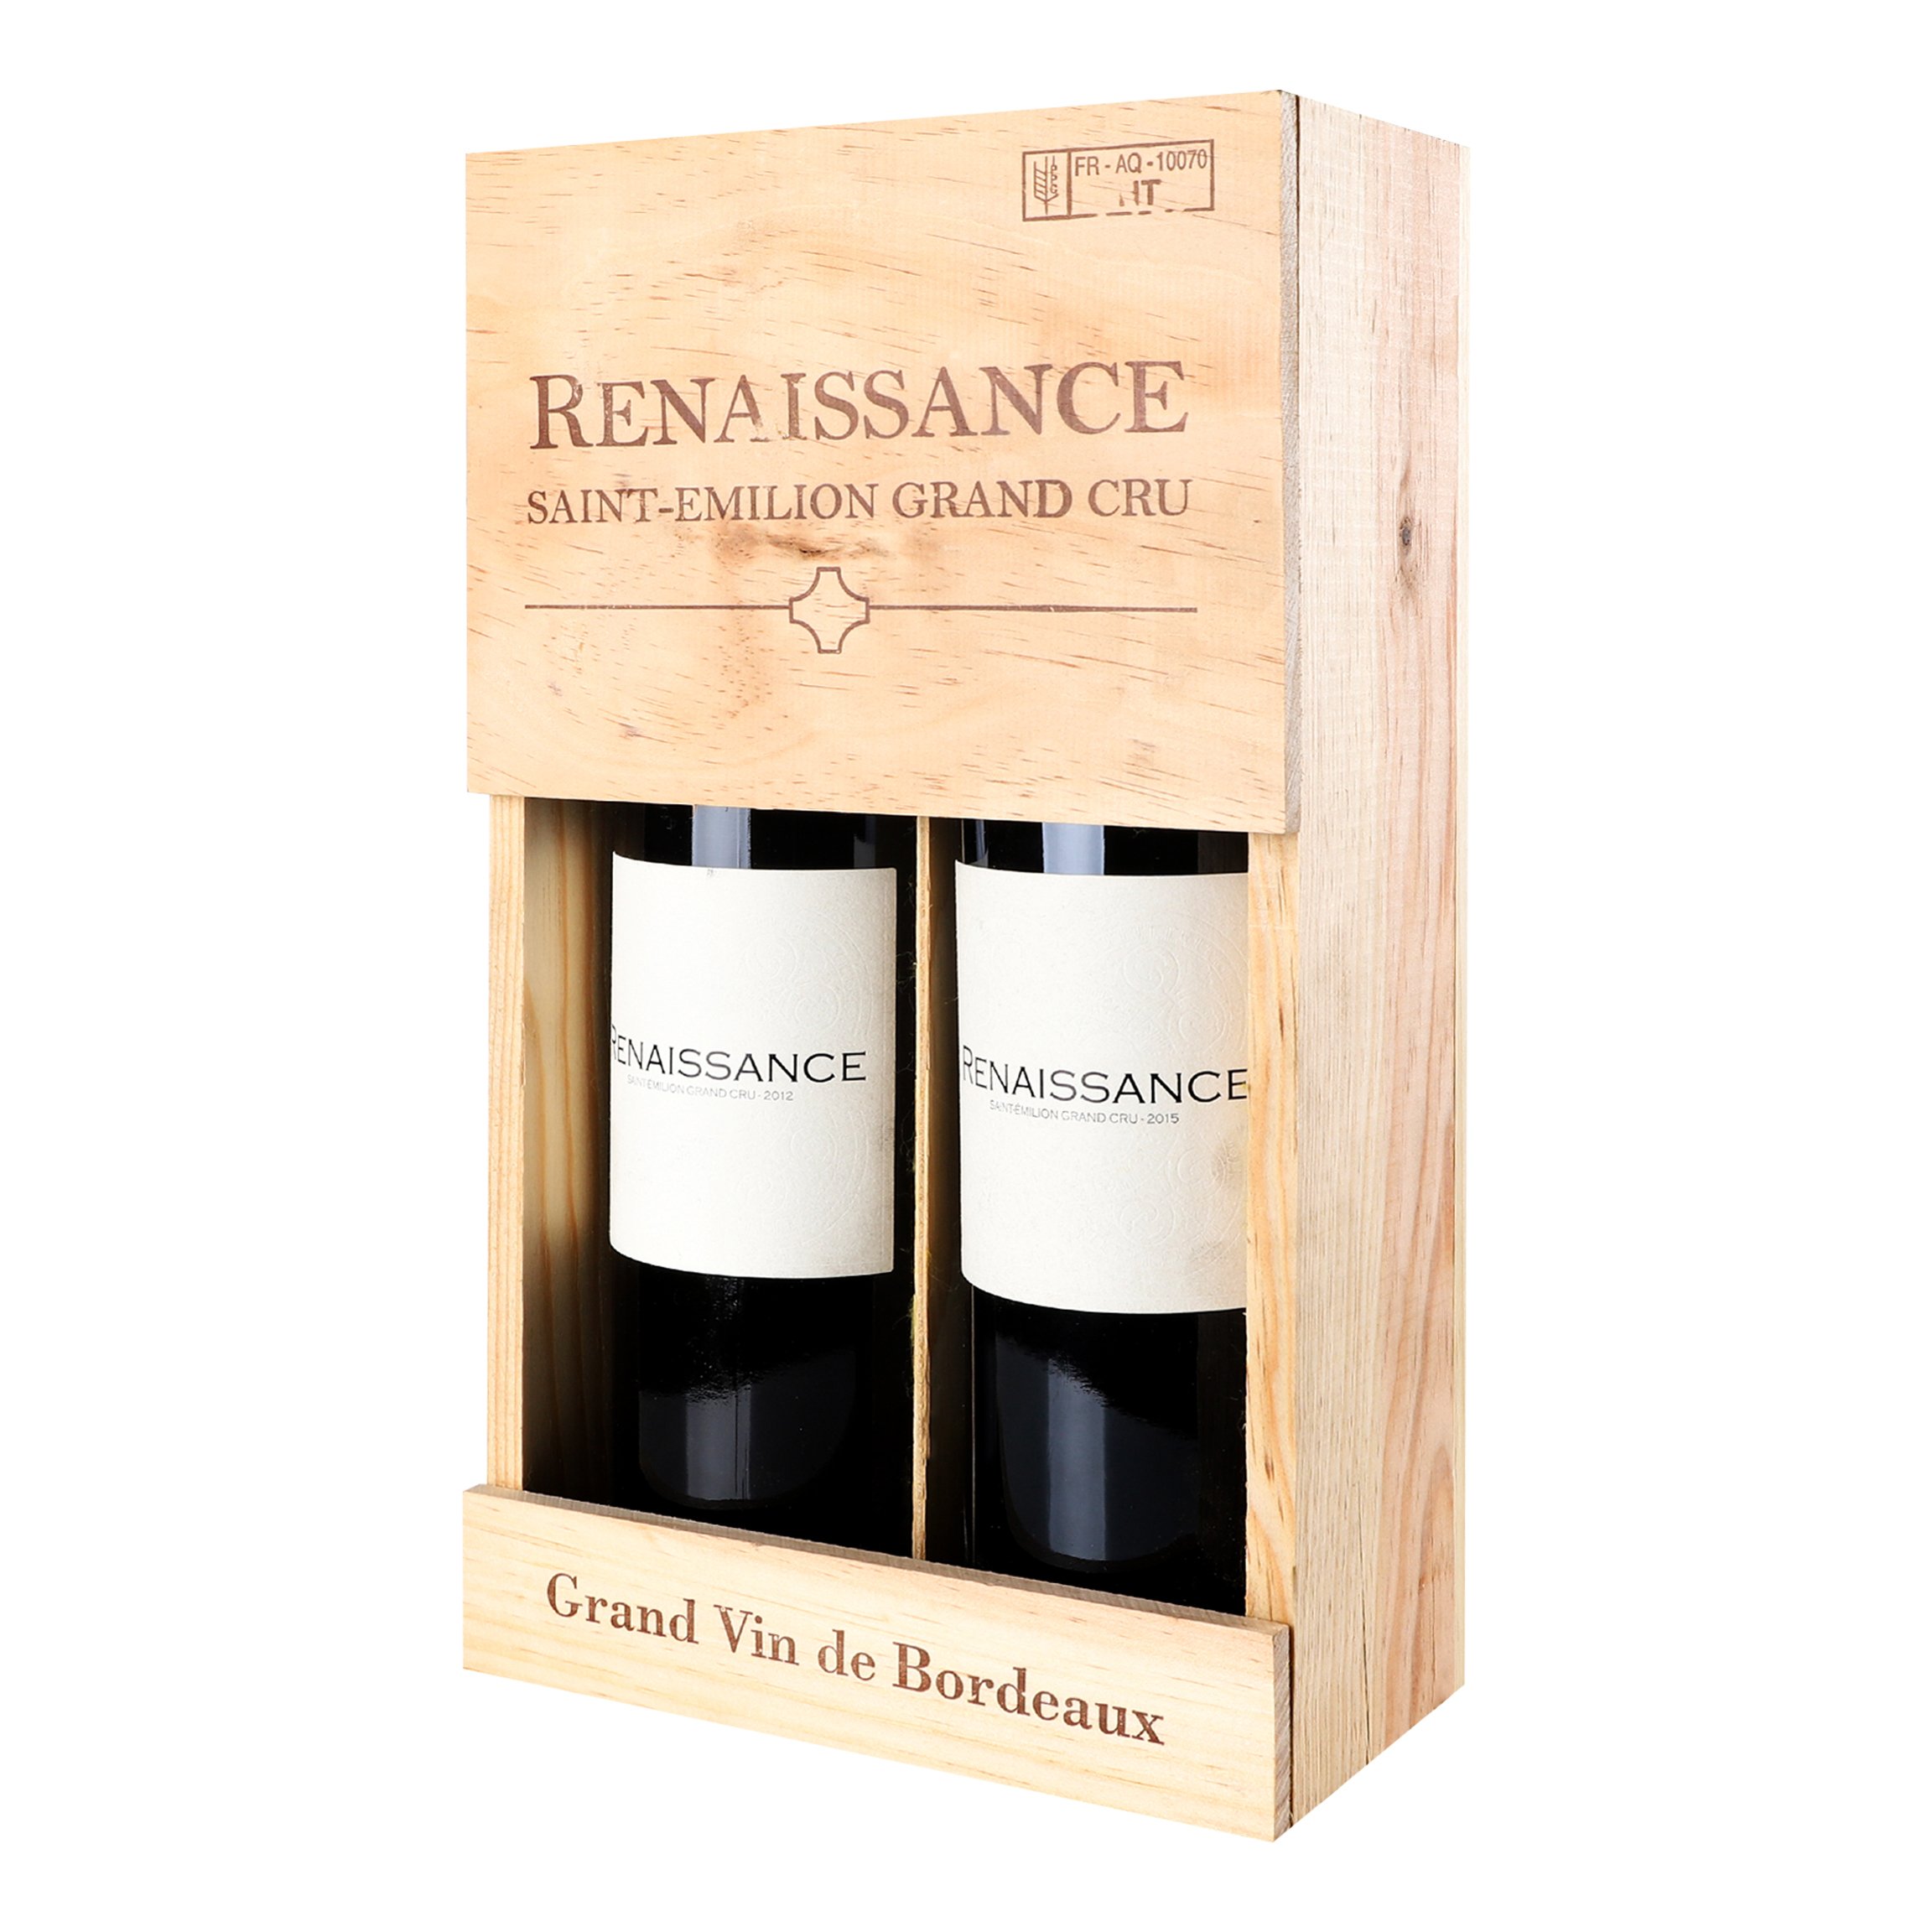 Набор вина Chateau Les Religieuses Renaissance, 2012&2015 года, красное, сухое, 12,5%, 0,75 л - фото 2